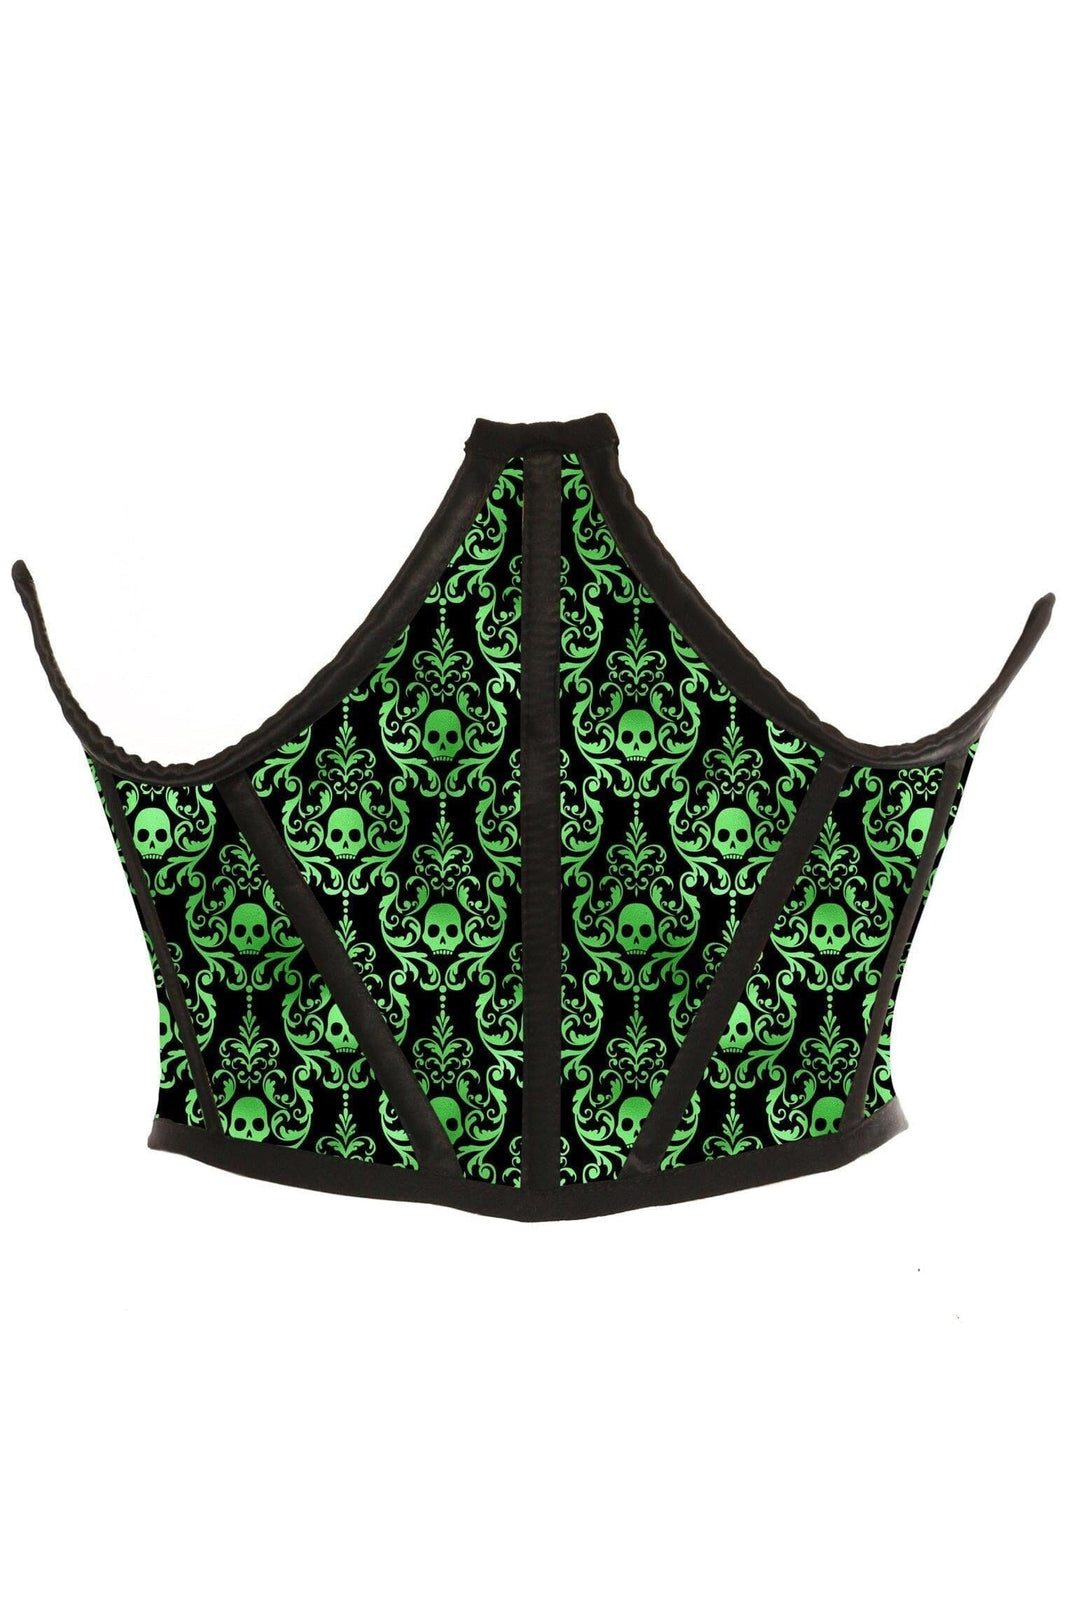 Green & Black Skull Satin Open Cup Waist Cincher-Devil Costumes-Daisy Corsets-Green-2X-SEXYSHOES.COM